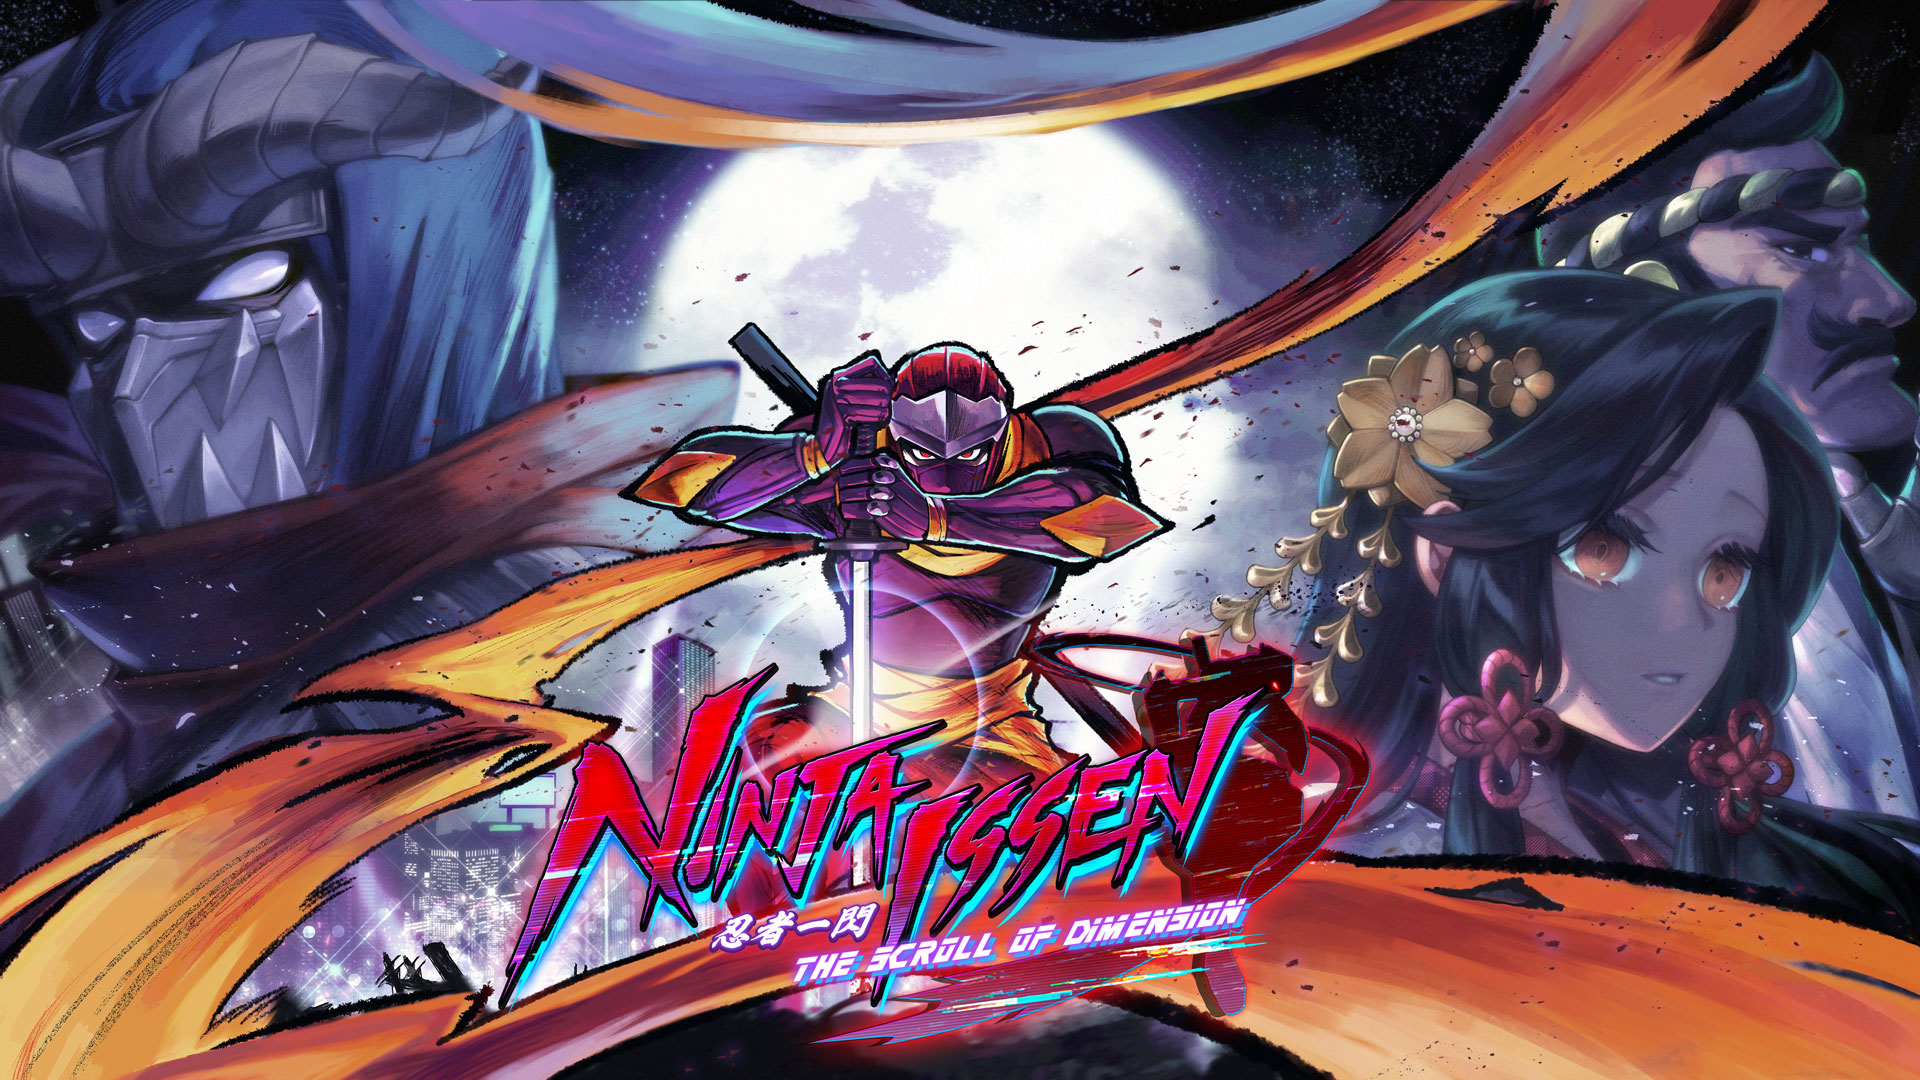 Ninja Issen Nintendo Switch Liteが抽選で当たるtwitterキャンペーンを実施